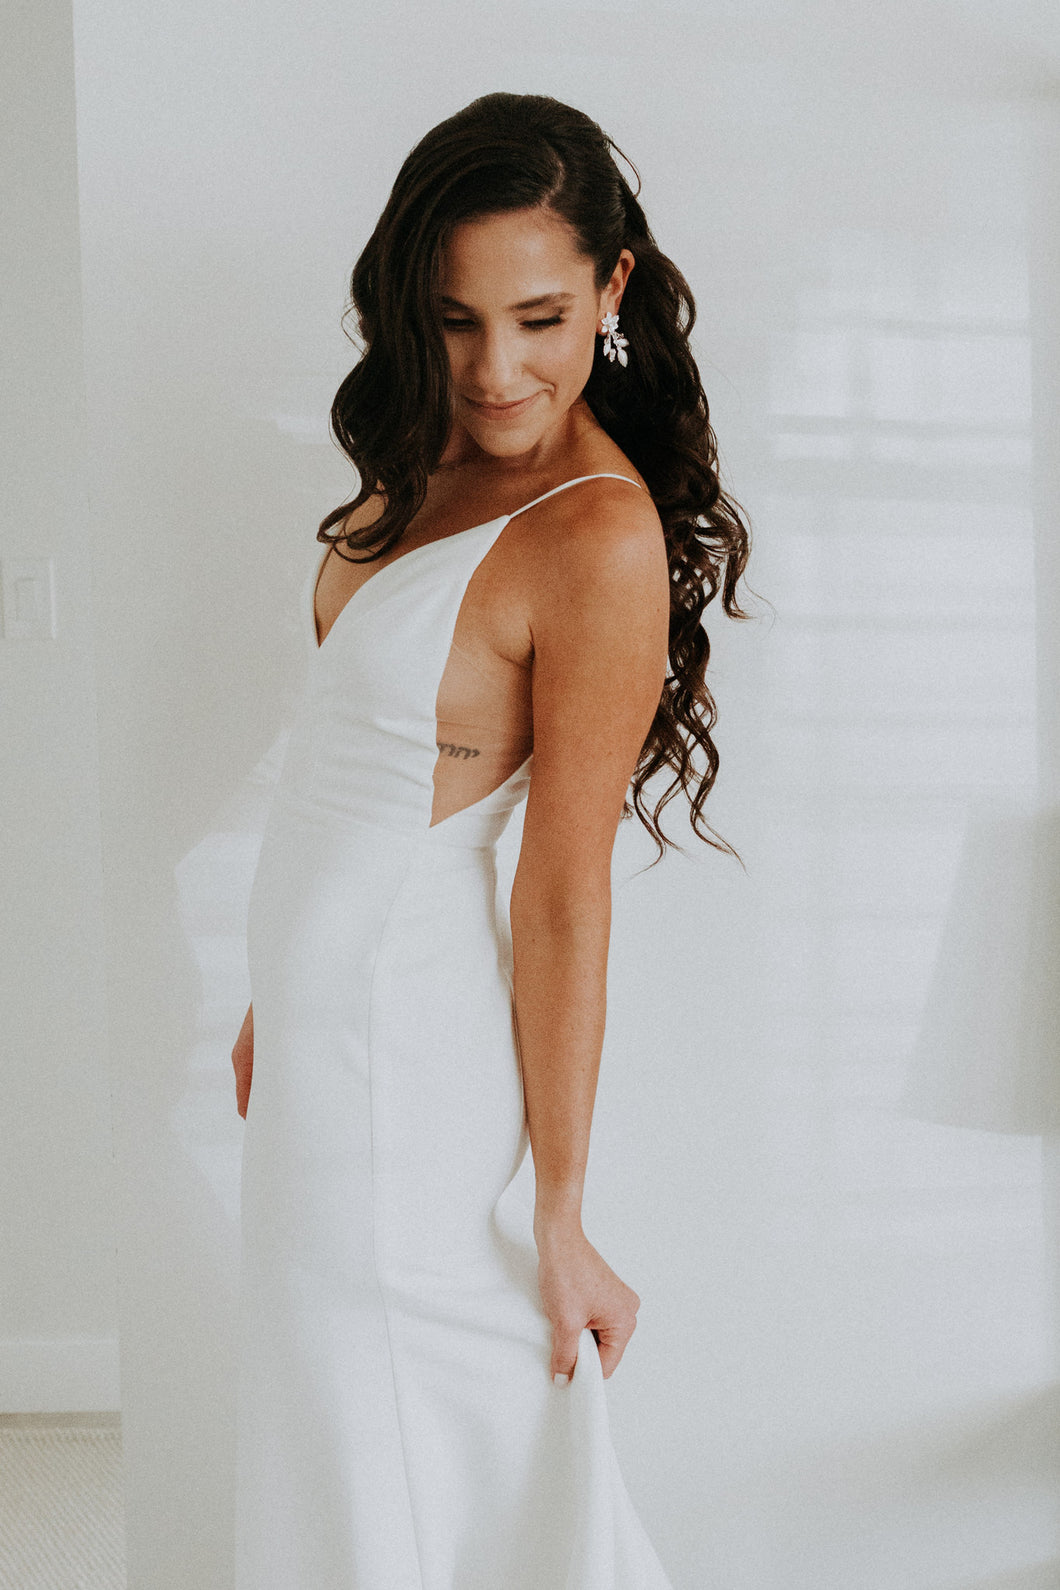 Sarah Seven 'Mandi' wedding dress size-04 PREOWNED